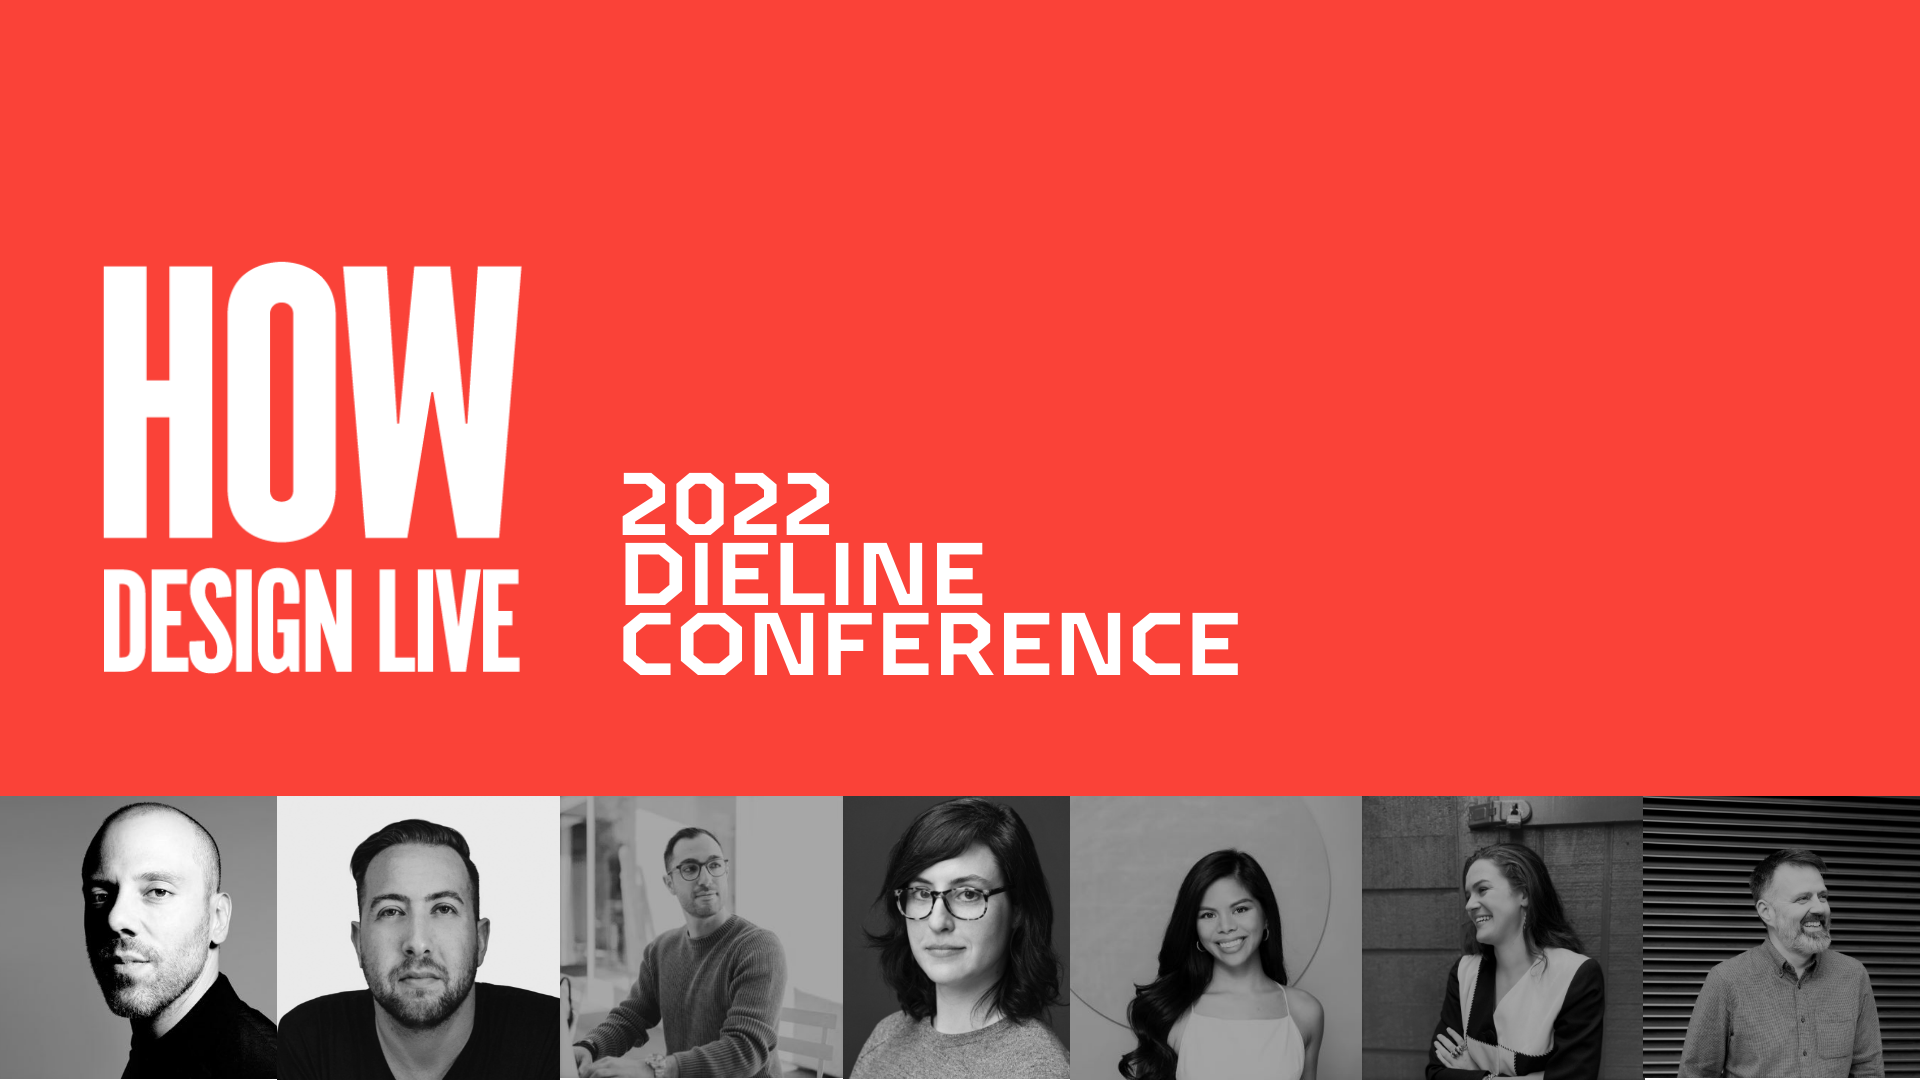 Dieline Conference at HOW Design Live